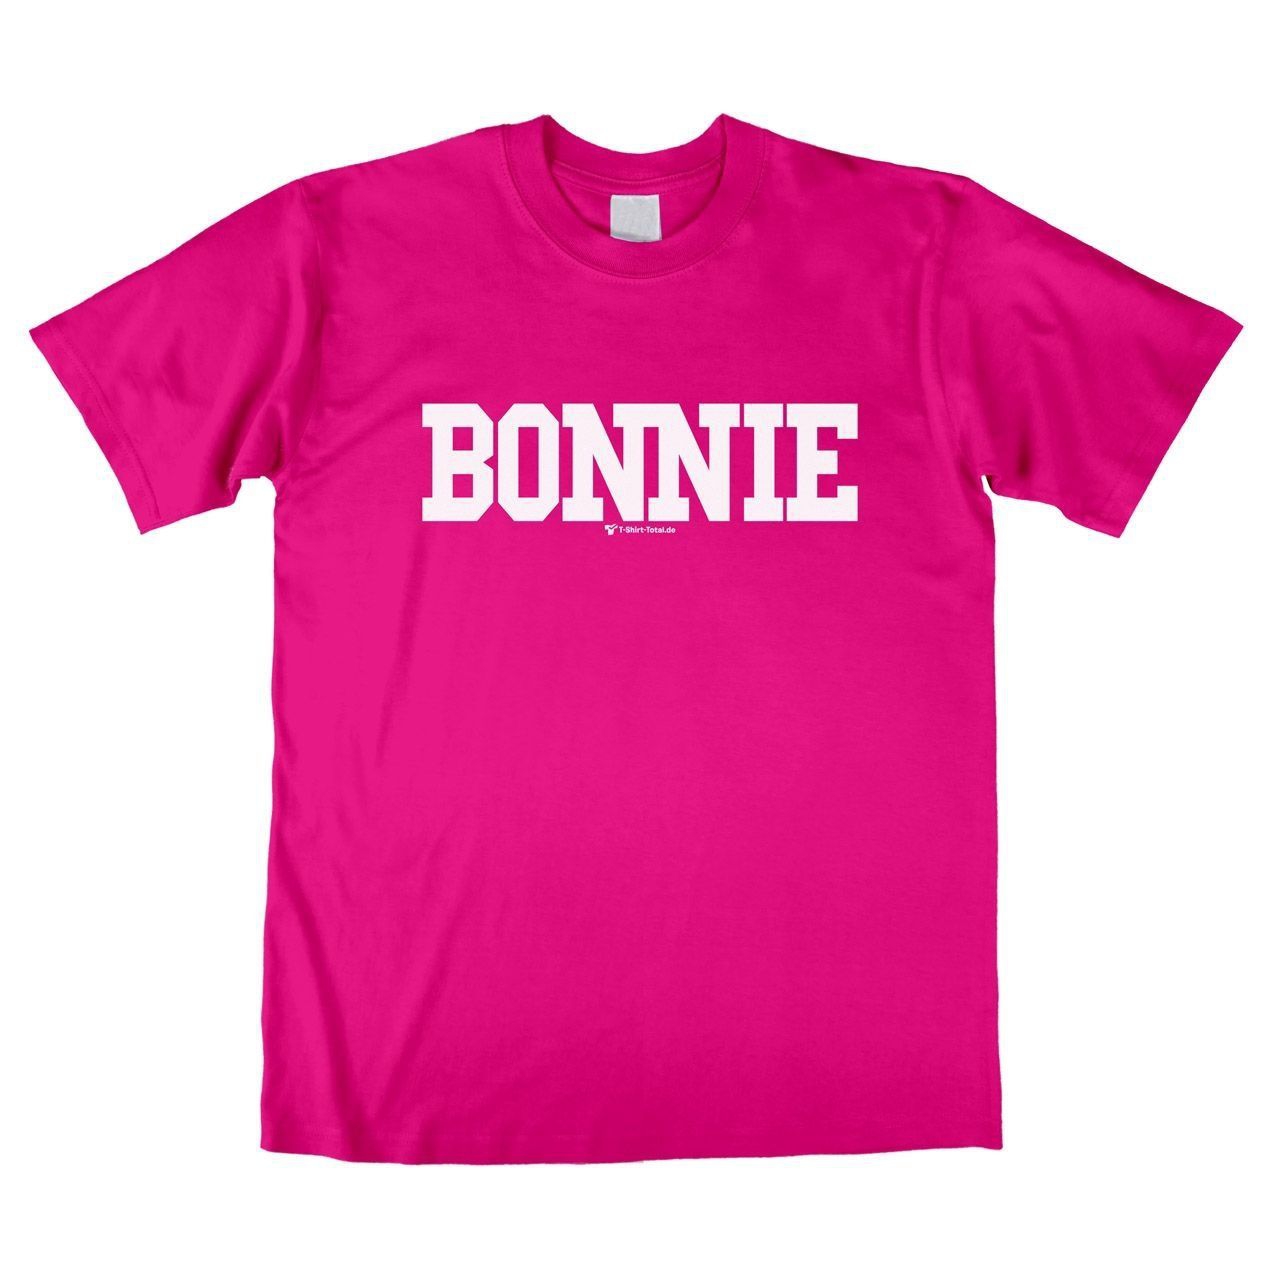 Bonnie Unisex T-Shirt pink Small